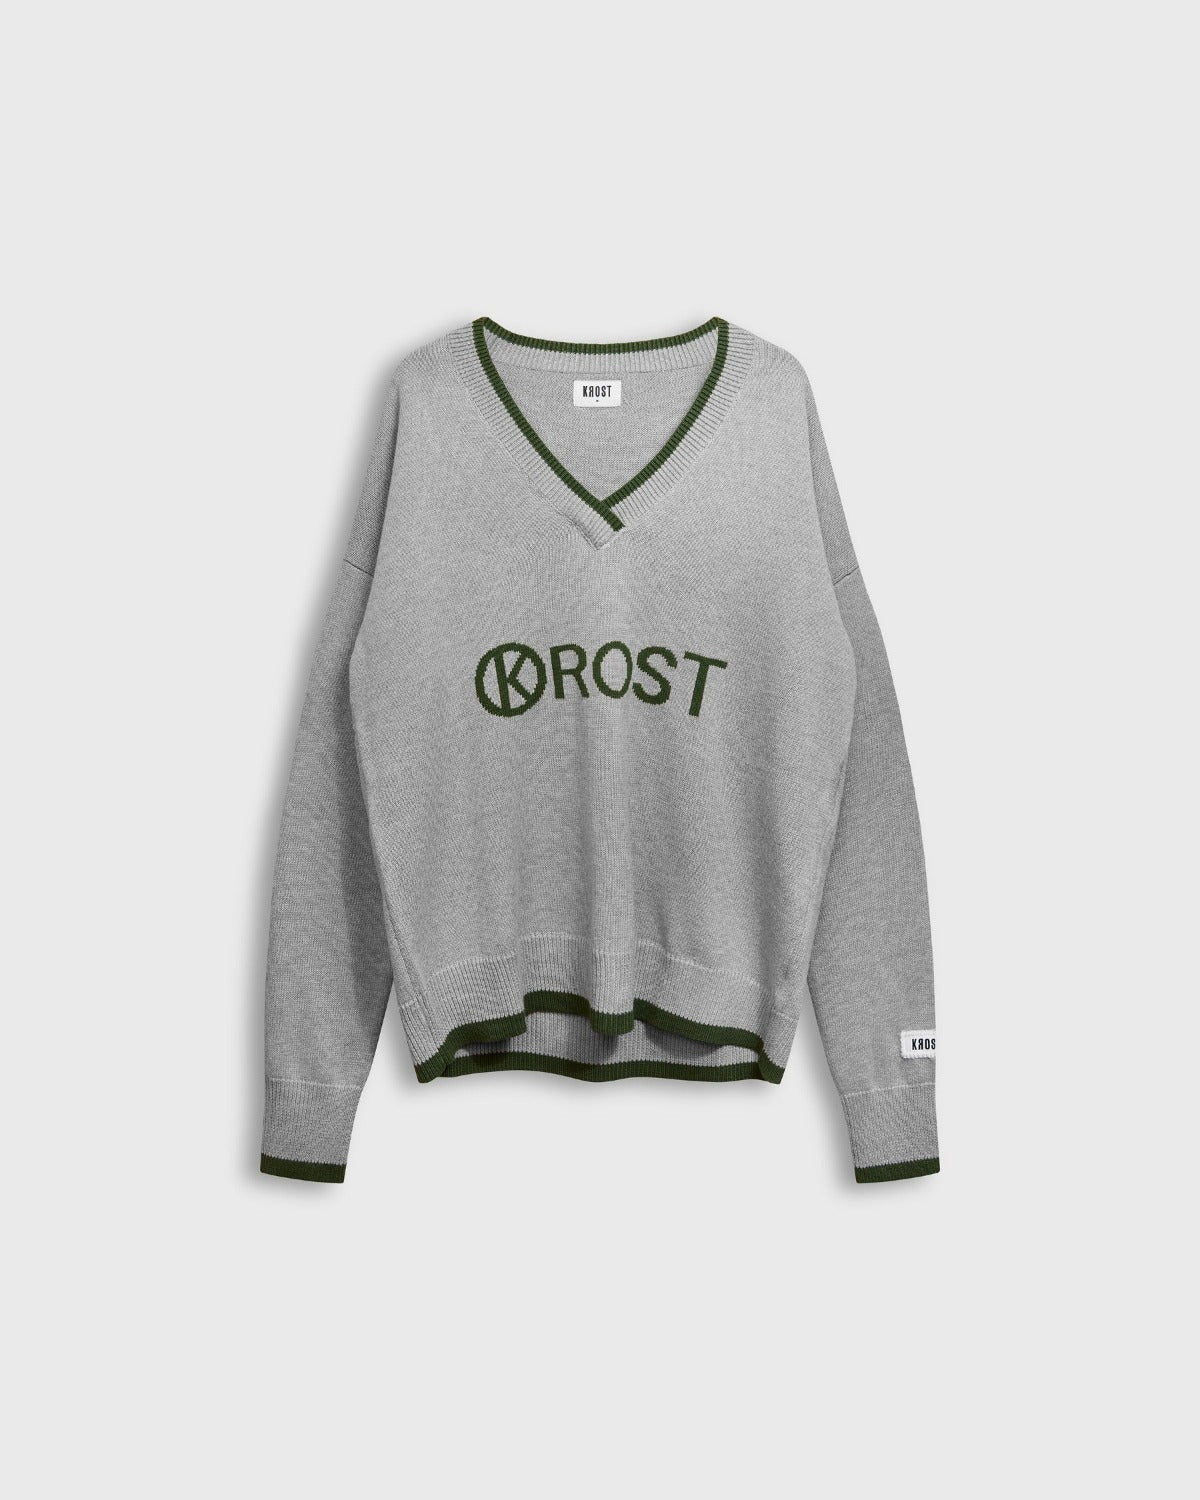 Men's grey long sleeve Kosher K v-neck 100% cotton sweater by Krost NY